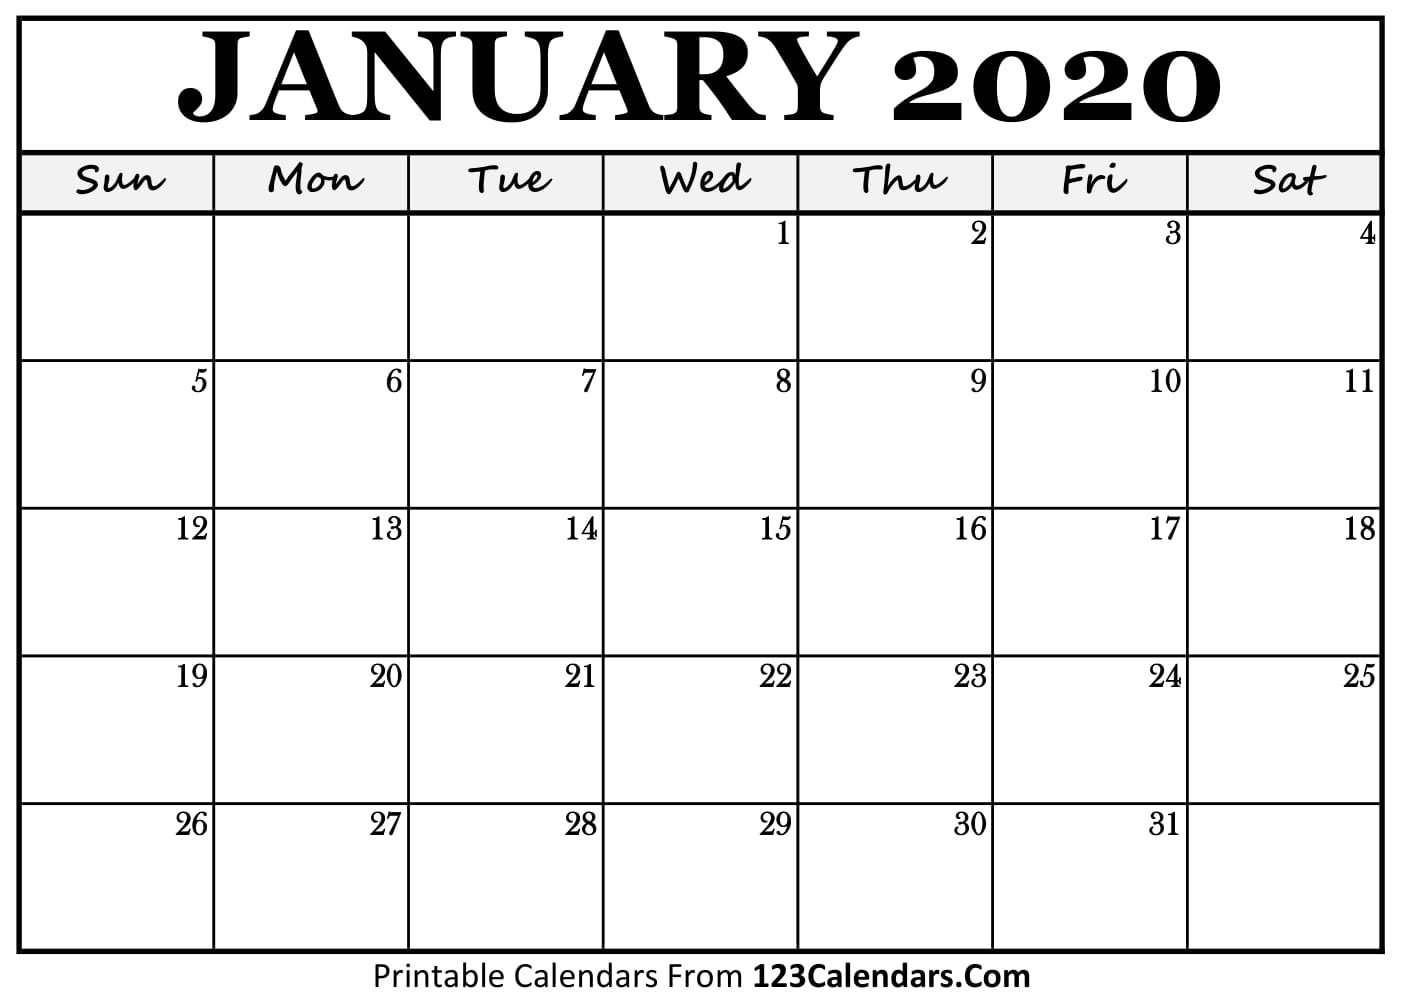 Free Printable Calendar | 123Calendars throughout Printable Calendars From 123Calendars